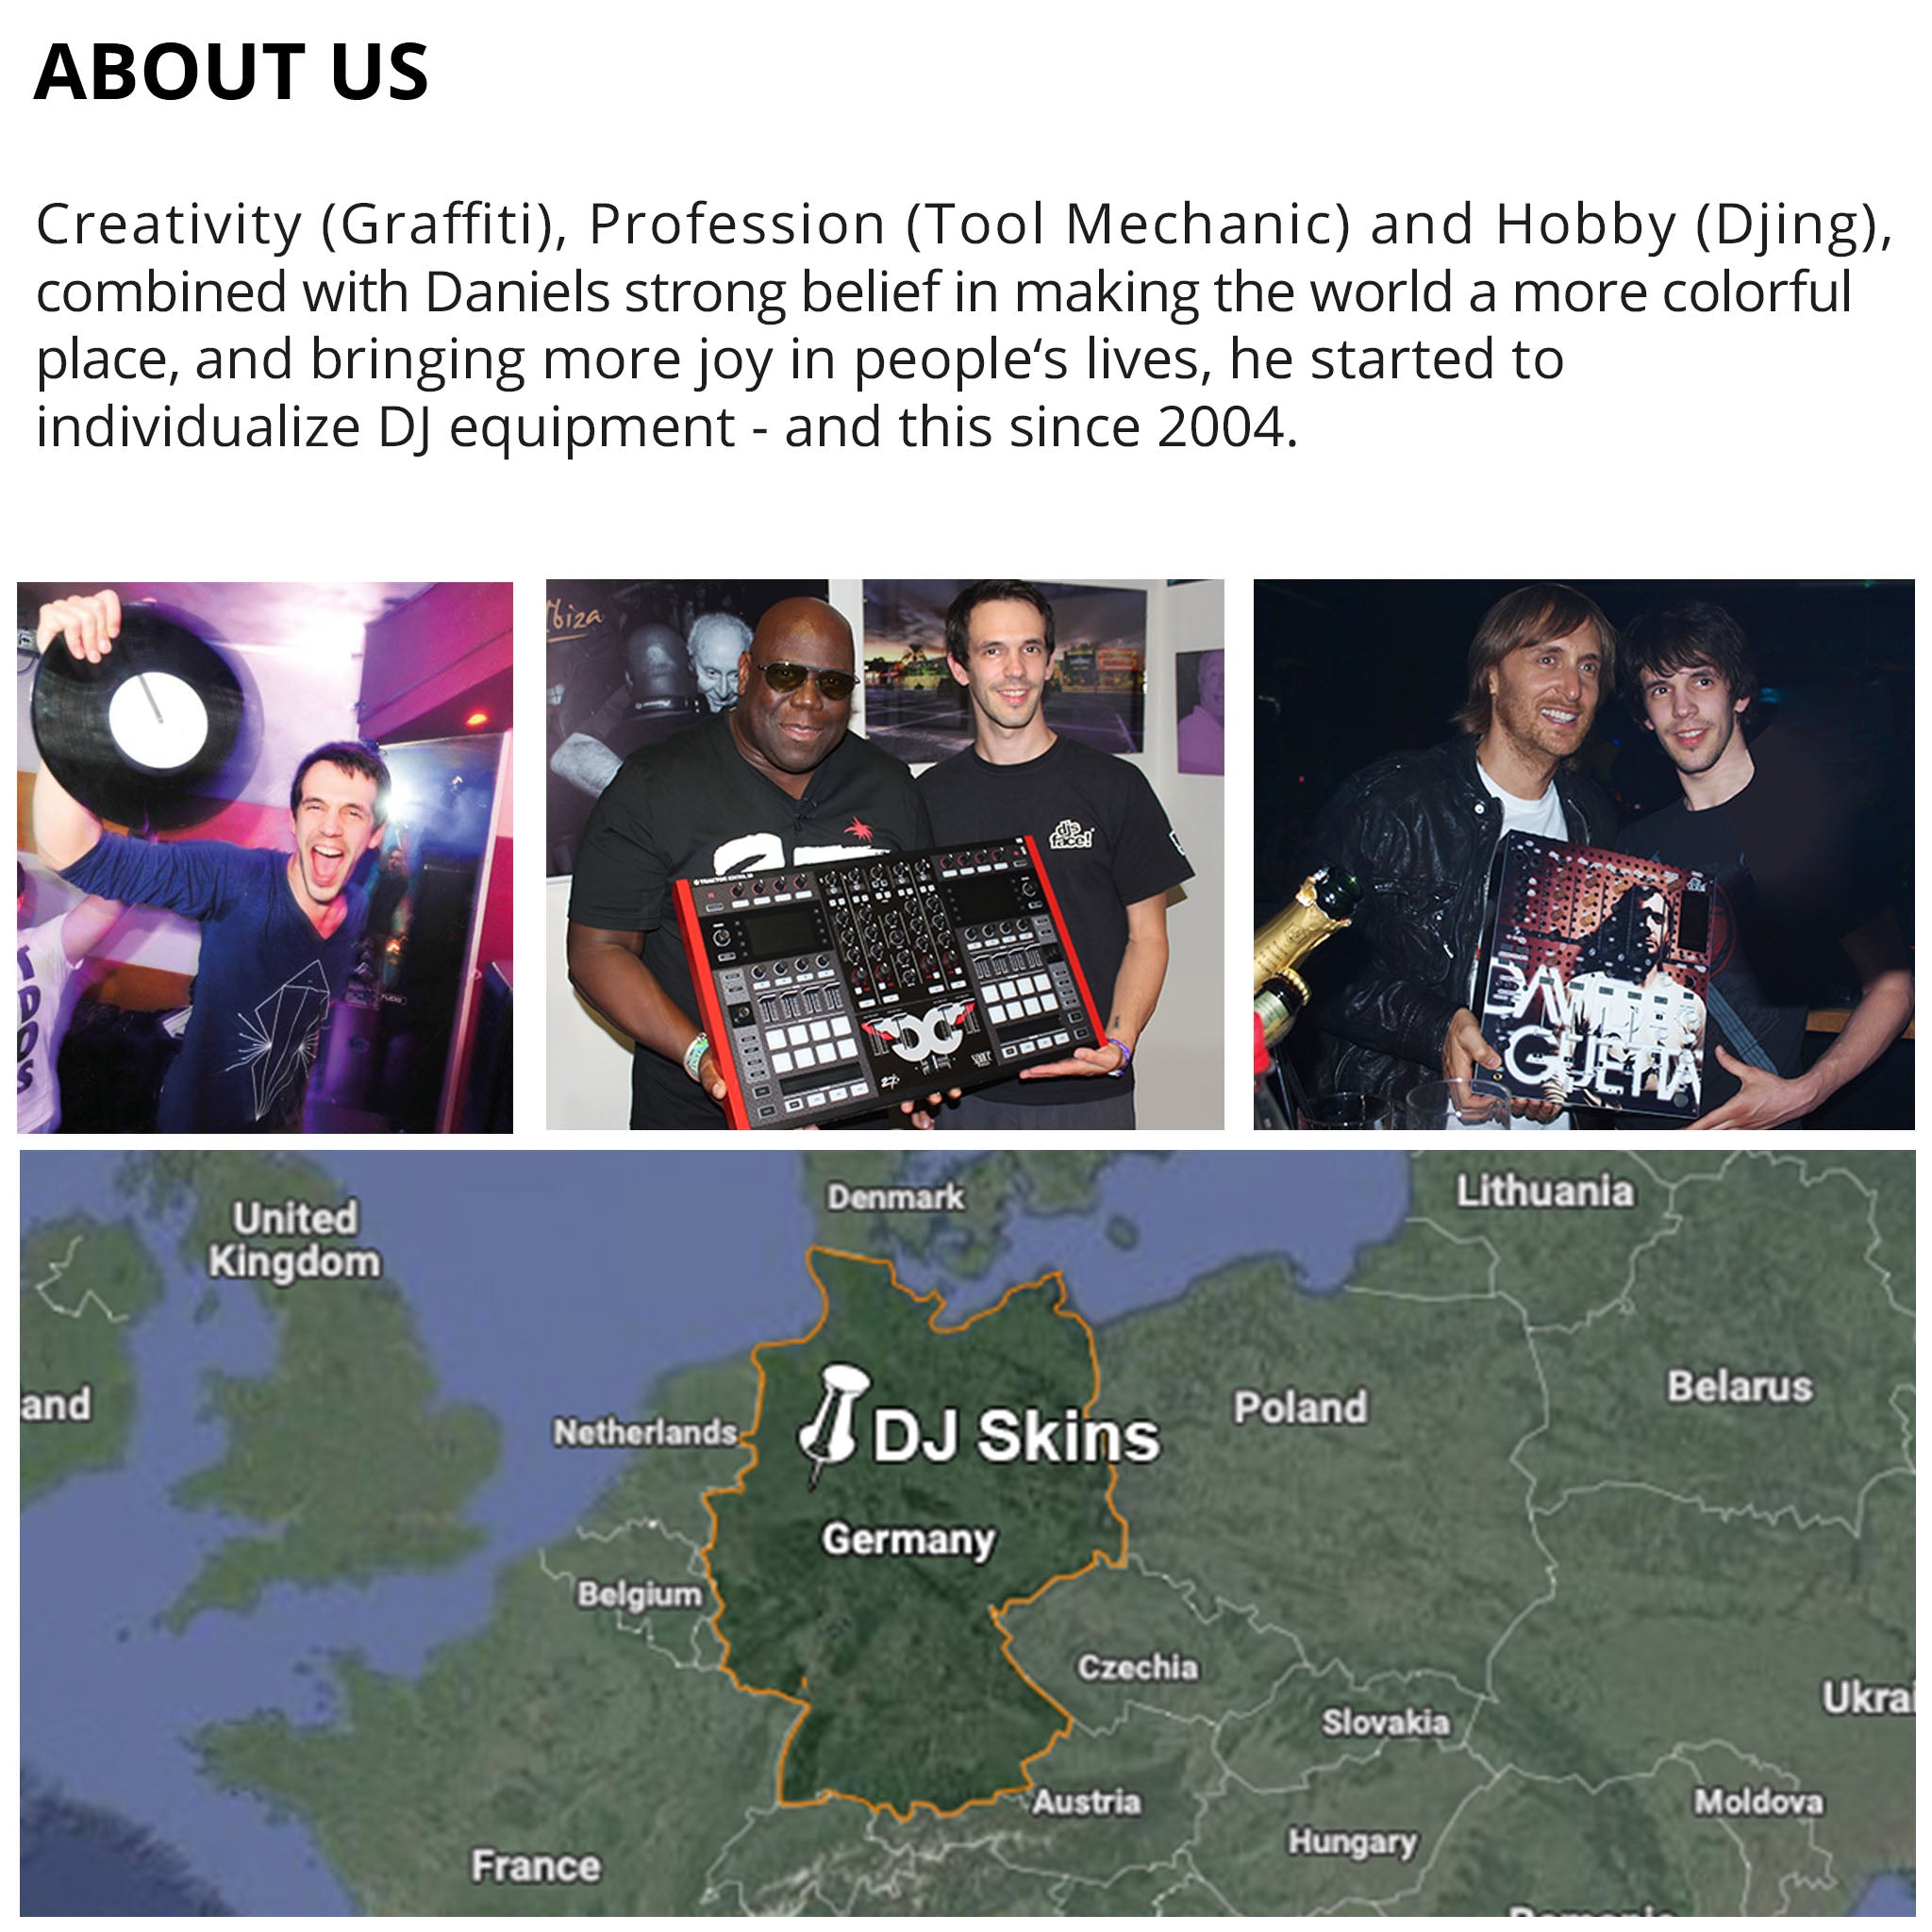 Pioneer DJ CDJ 2000 NEXUS 2 Skin Black Hole